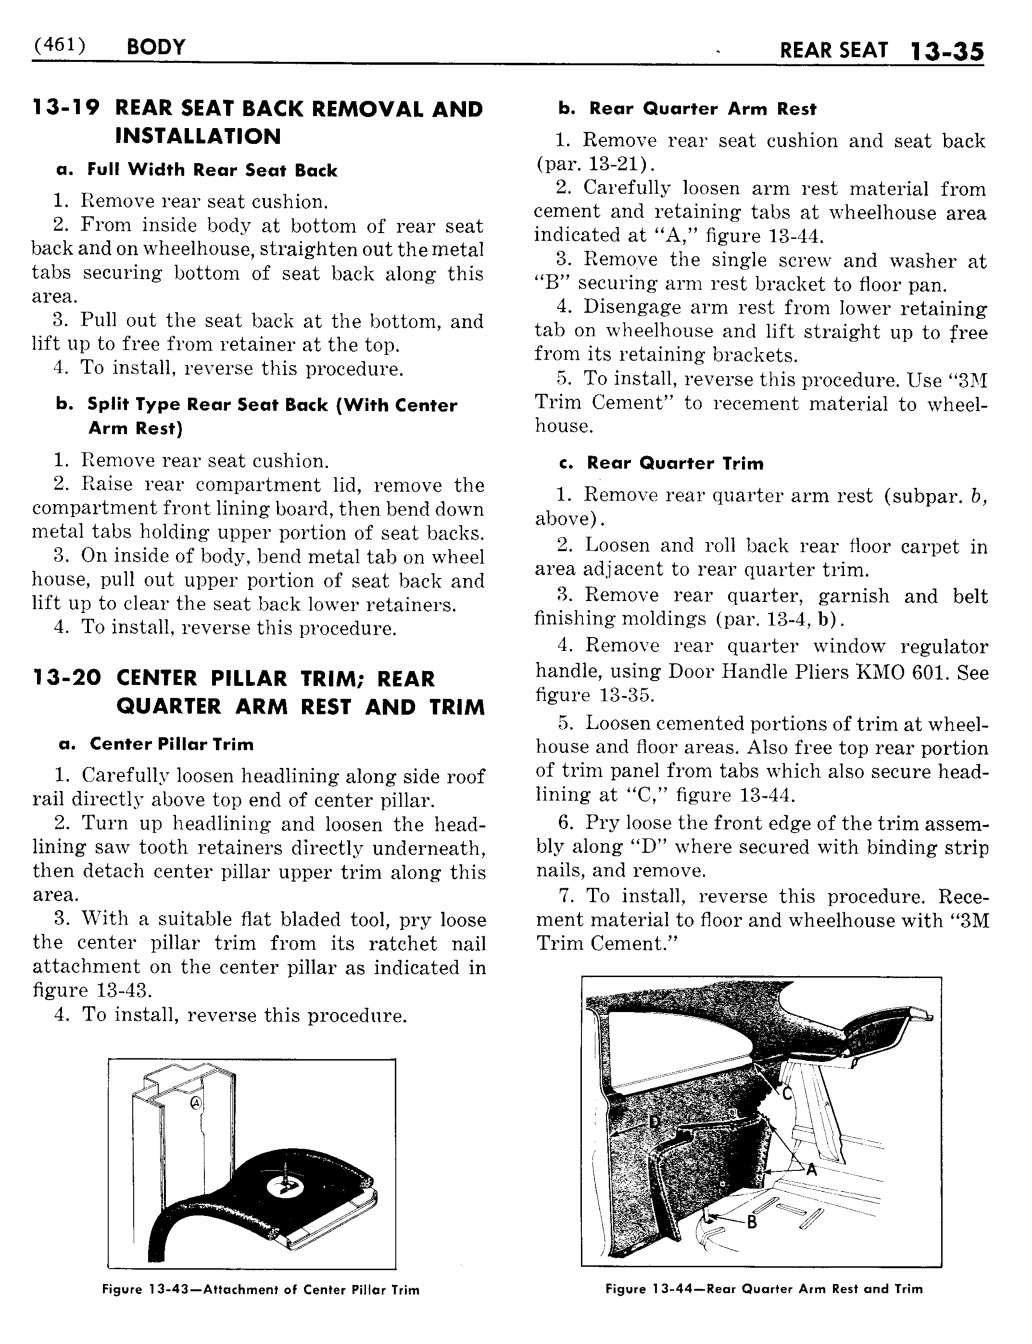 n_14 1951 Buick Shop Manual - Body-035-035.jpg